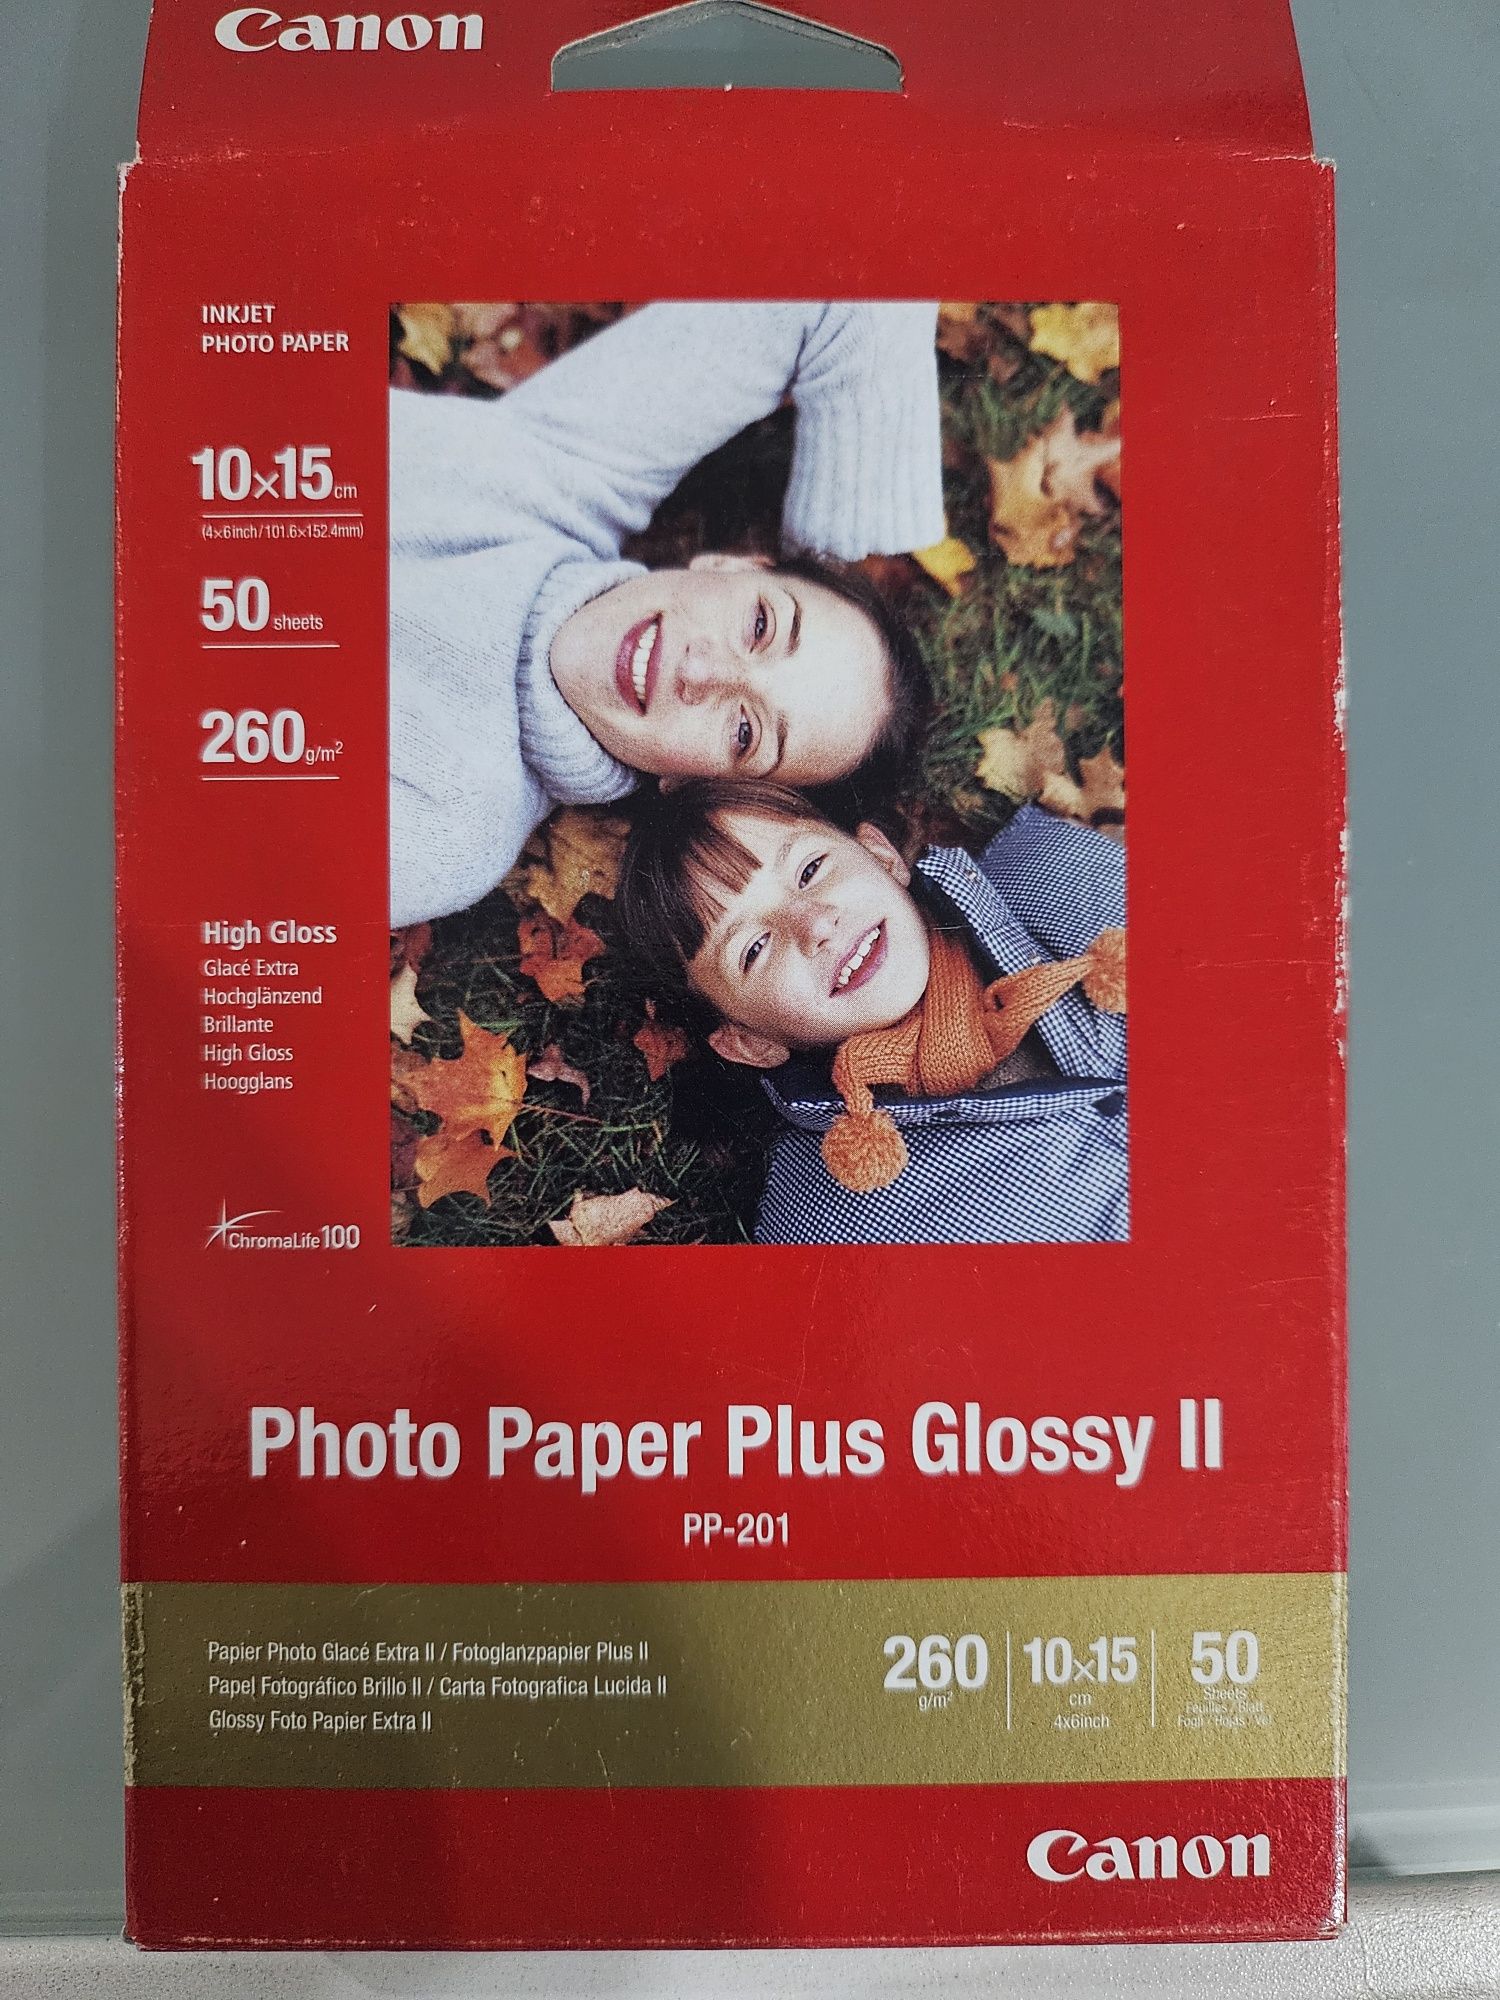 Canon photo paper plus glossy II